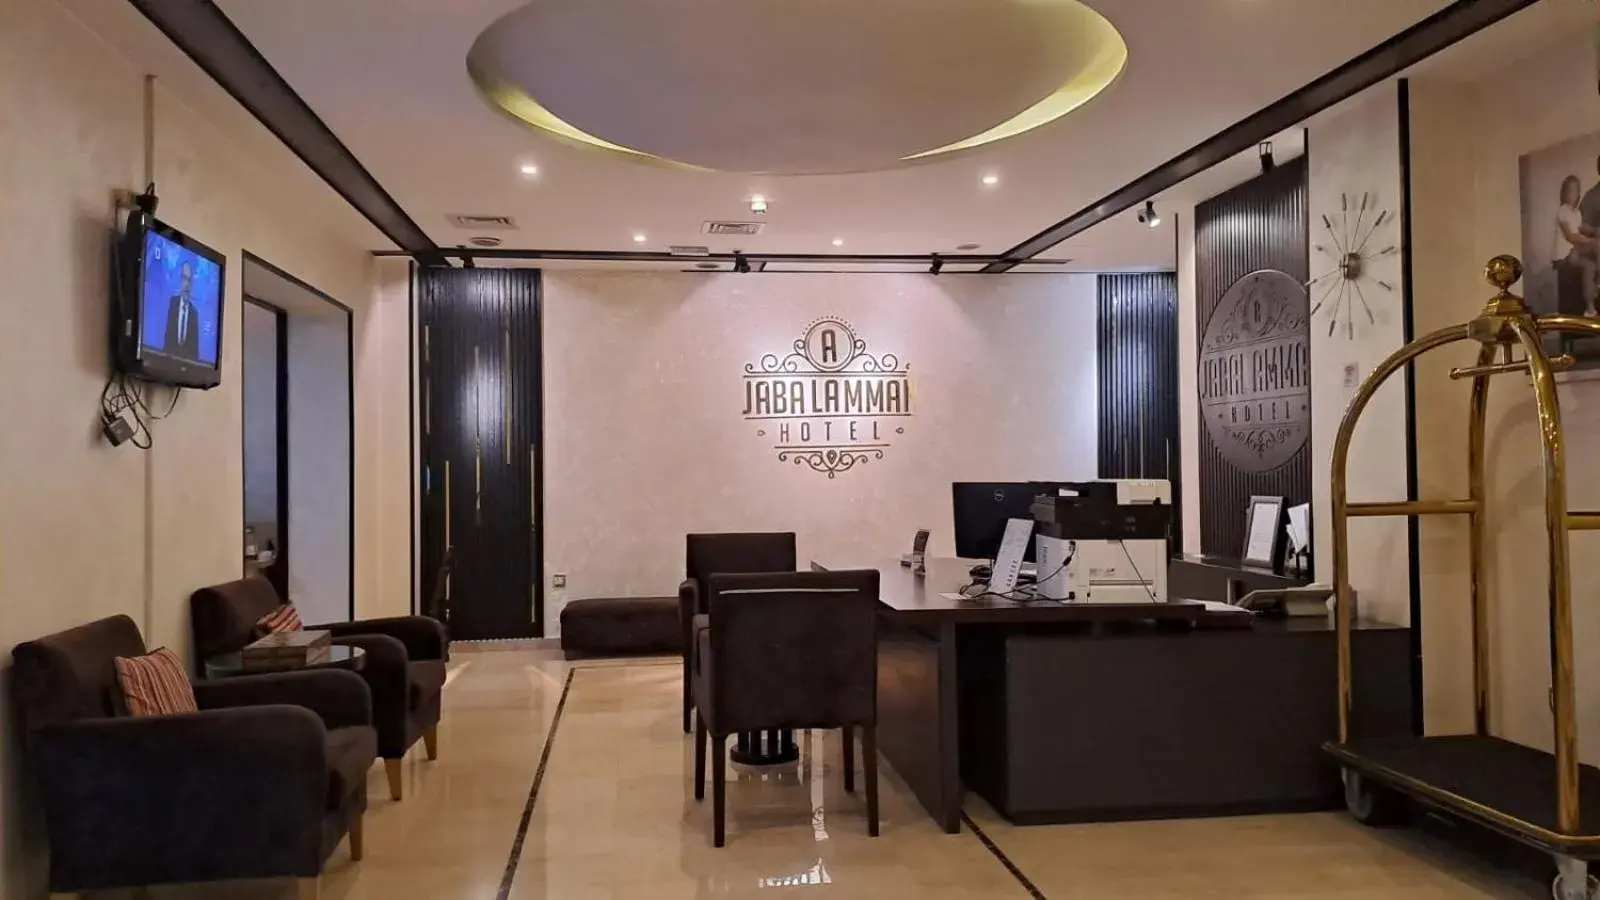 Lobby or reception in Jabal Amman Hotel (Heritage House)